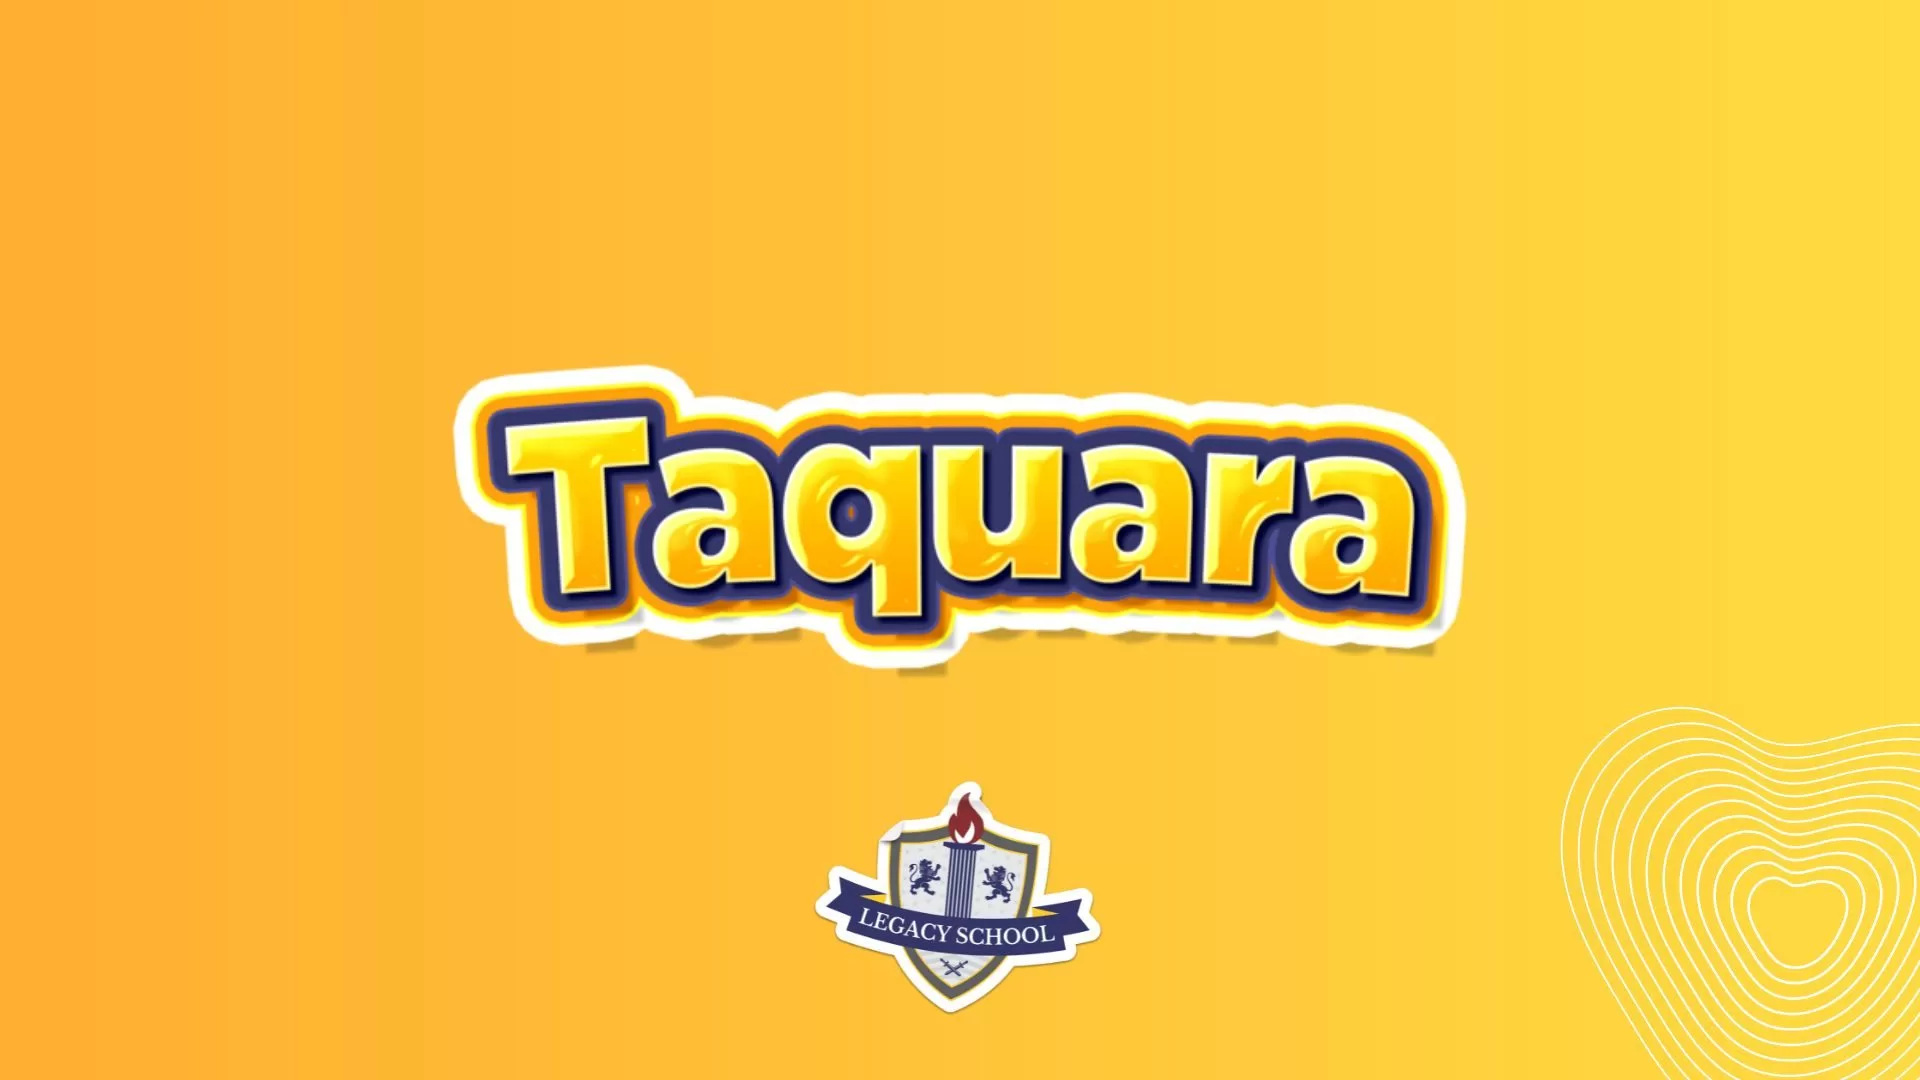 taquara